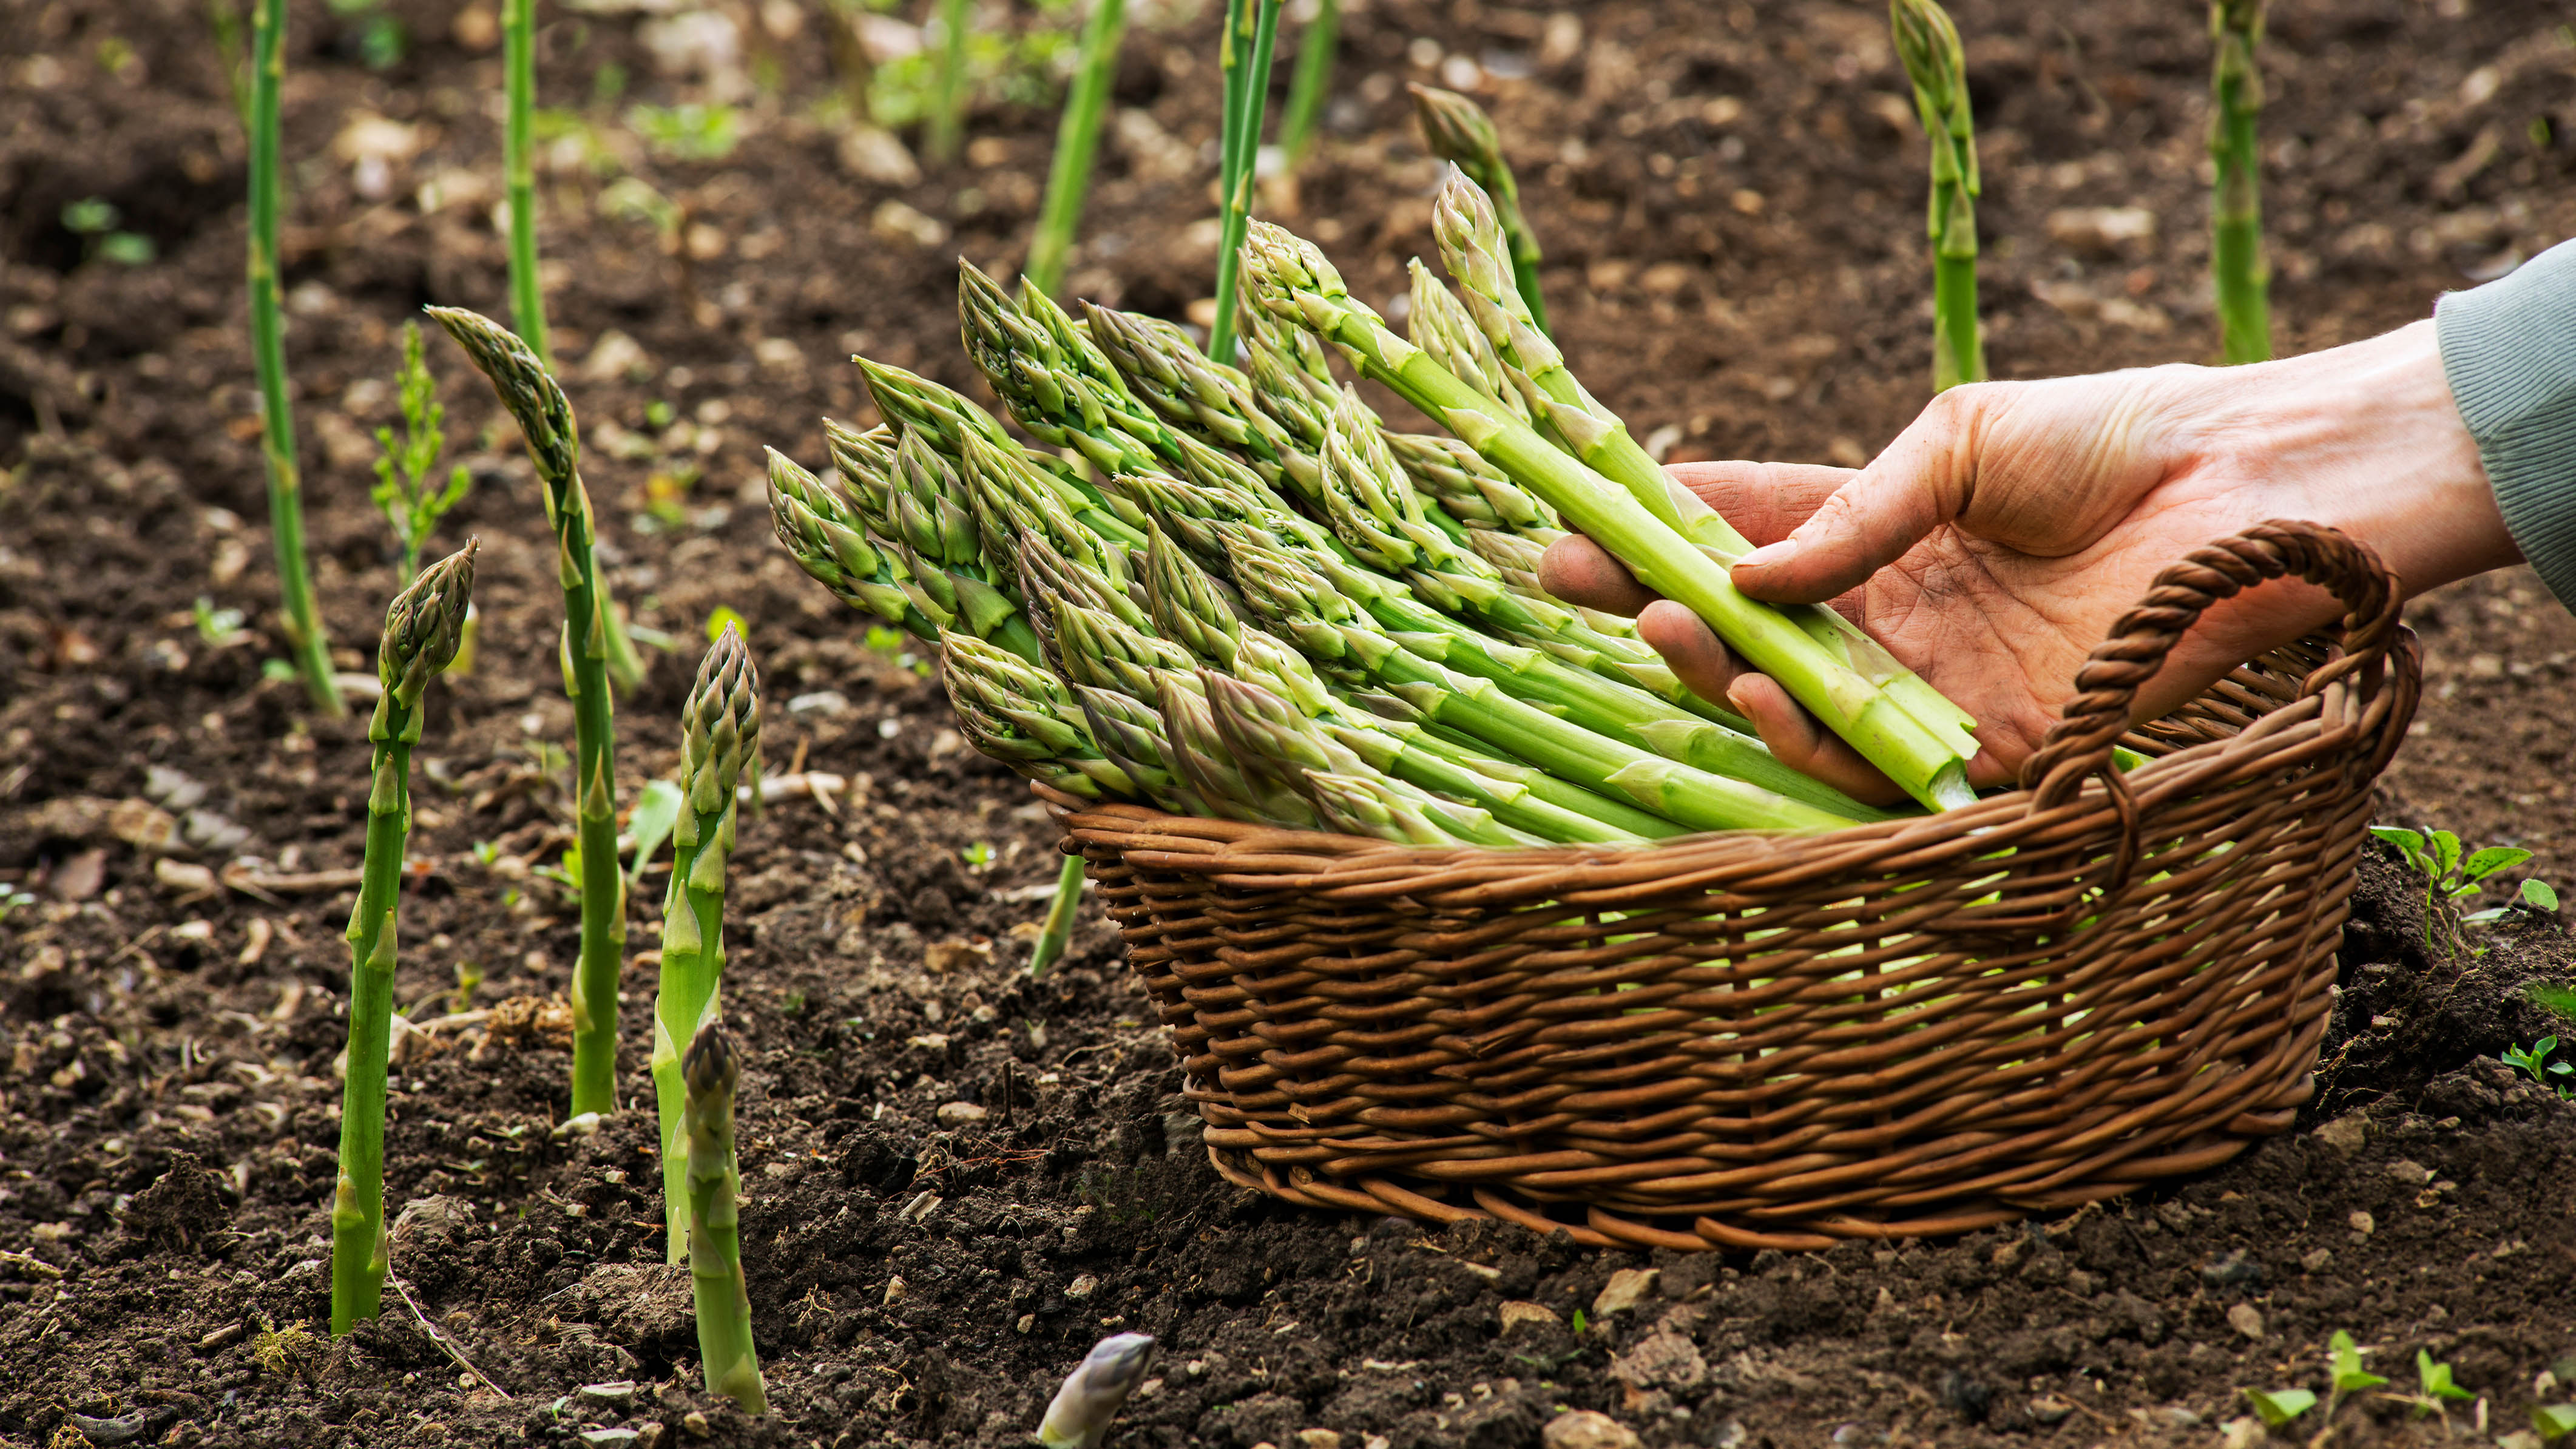 How to grow asparagus the easy way